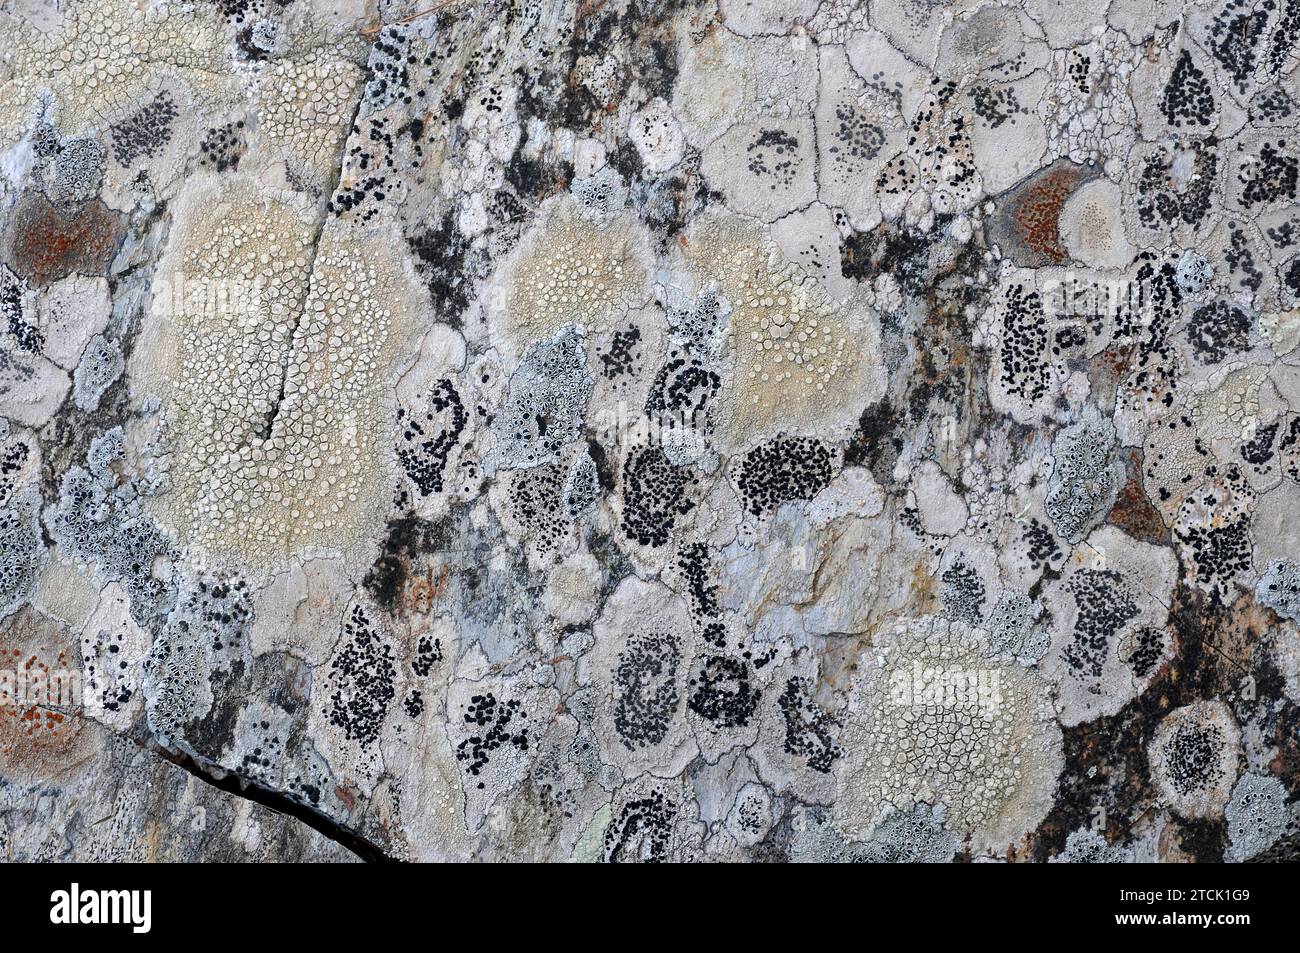 Crustoses lichens Ochrolechia, Porpiria and Lecanora on a rock. Stock Photo